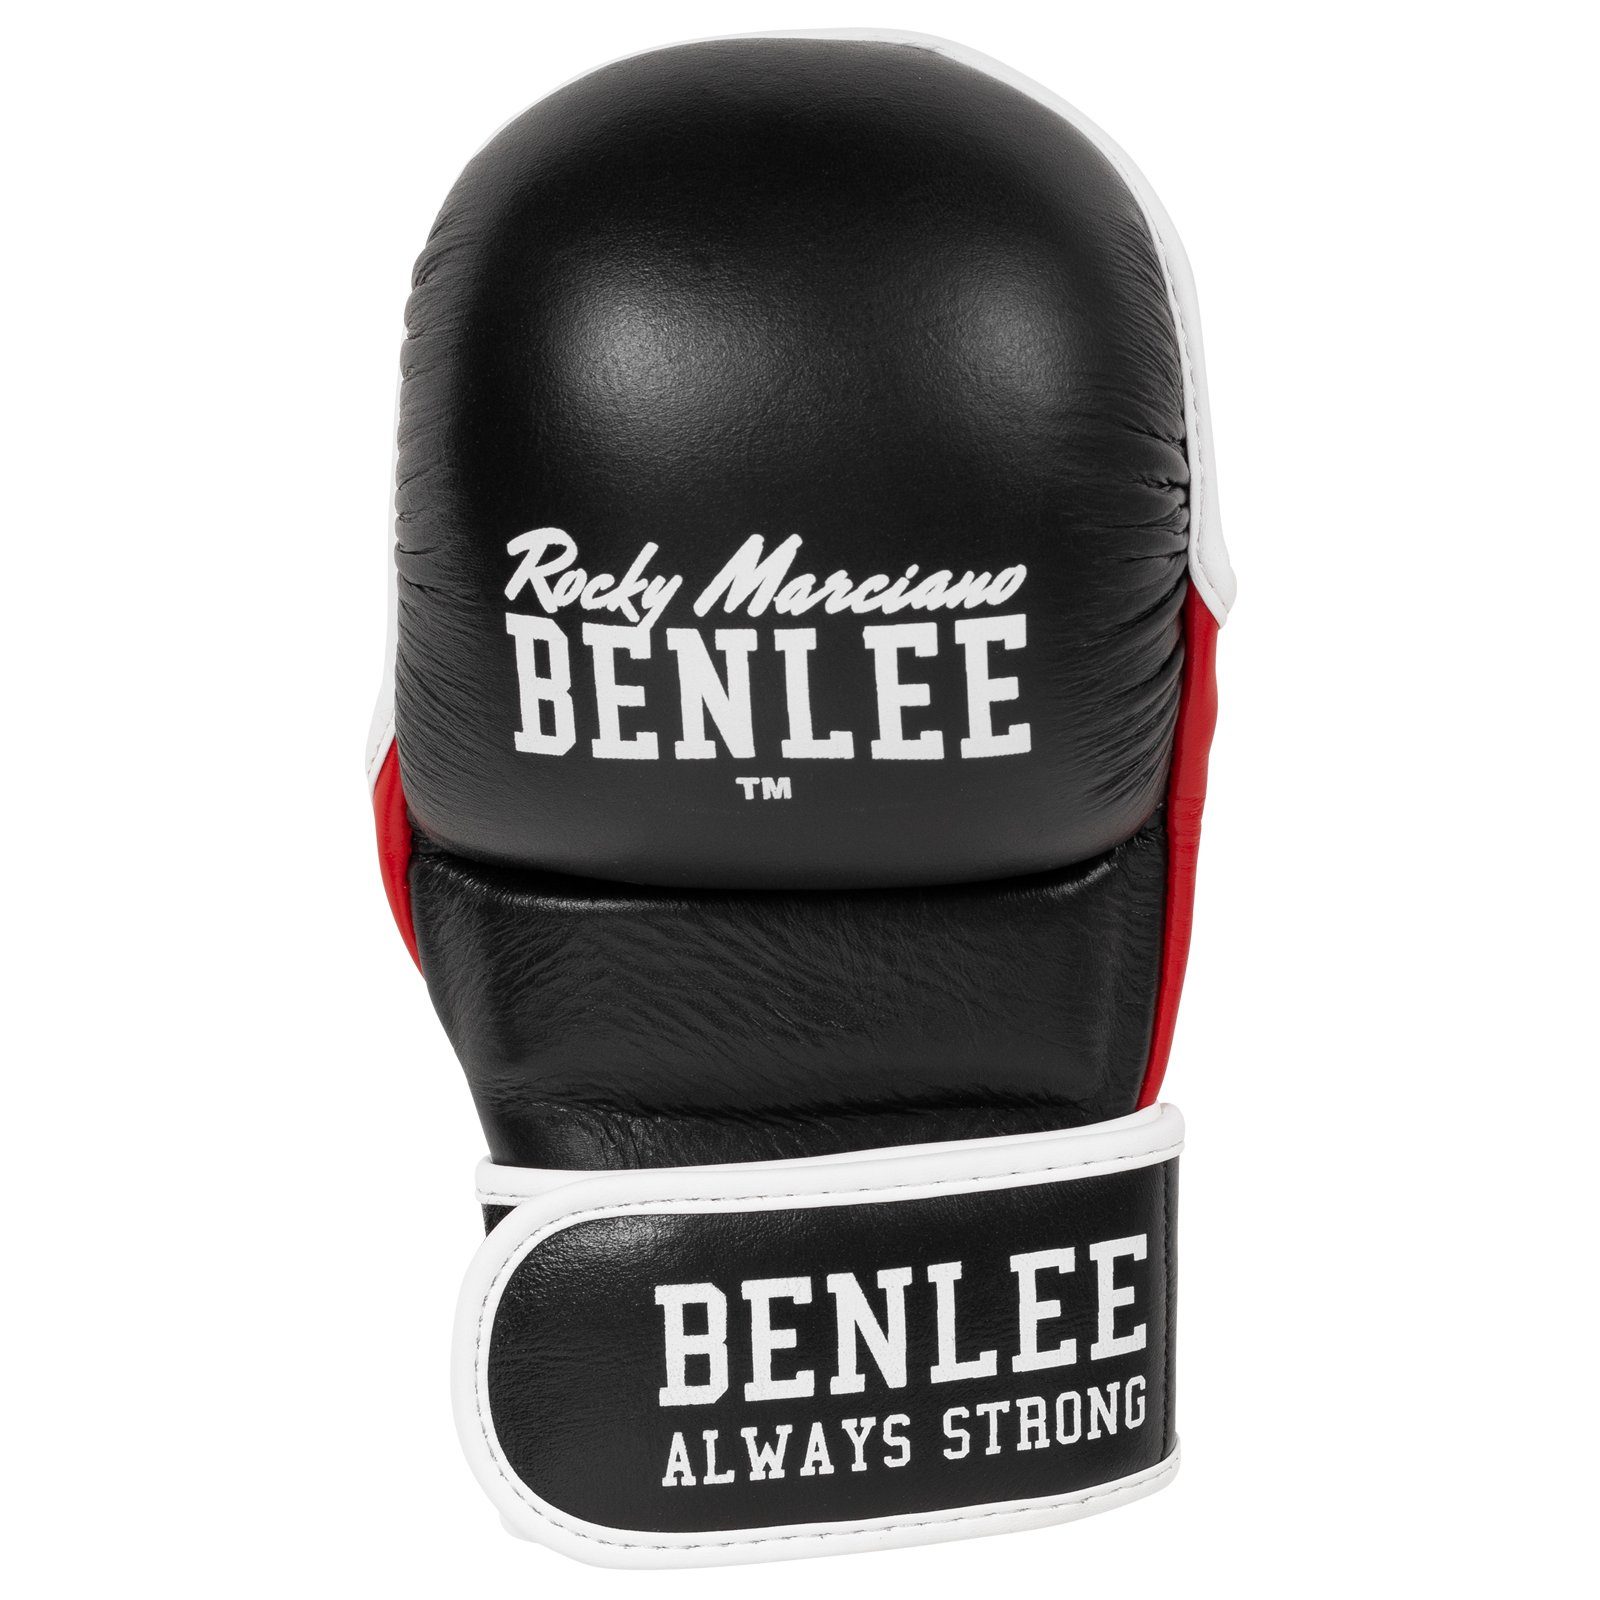 Benlee Rocky Marciano Boxhandschuhe STRIKER | Boxhandschuhe